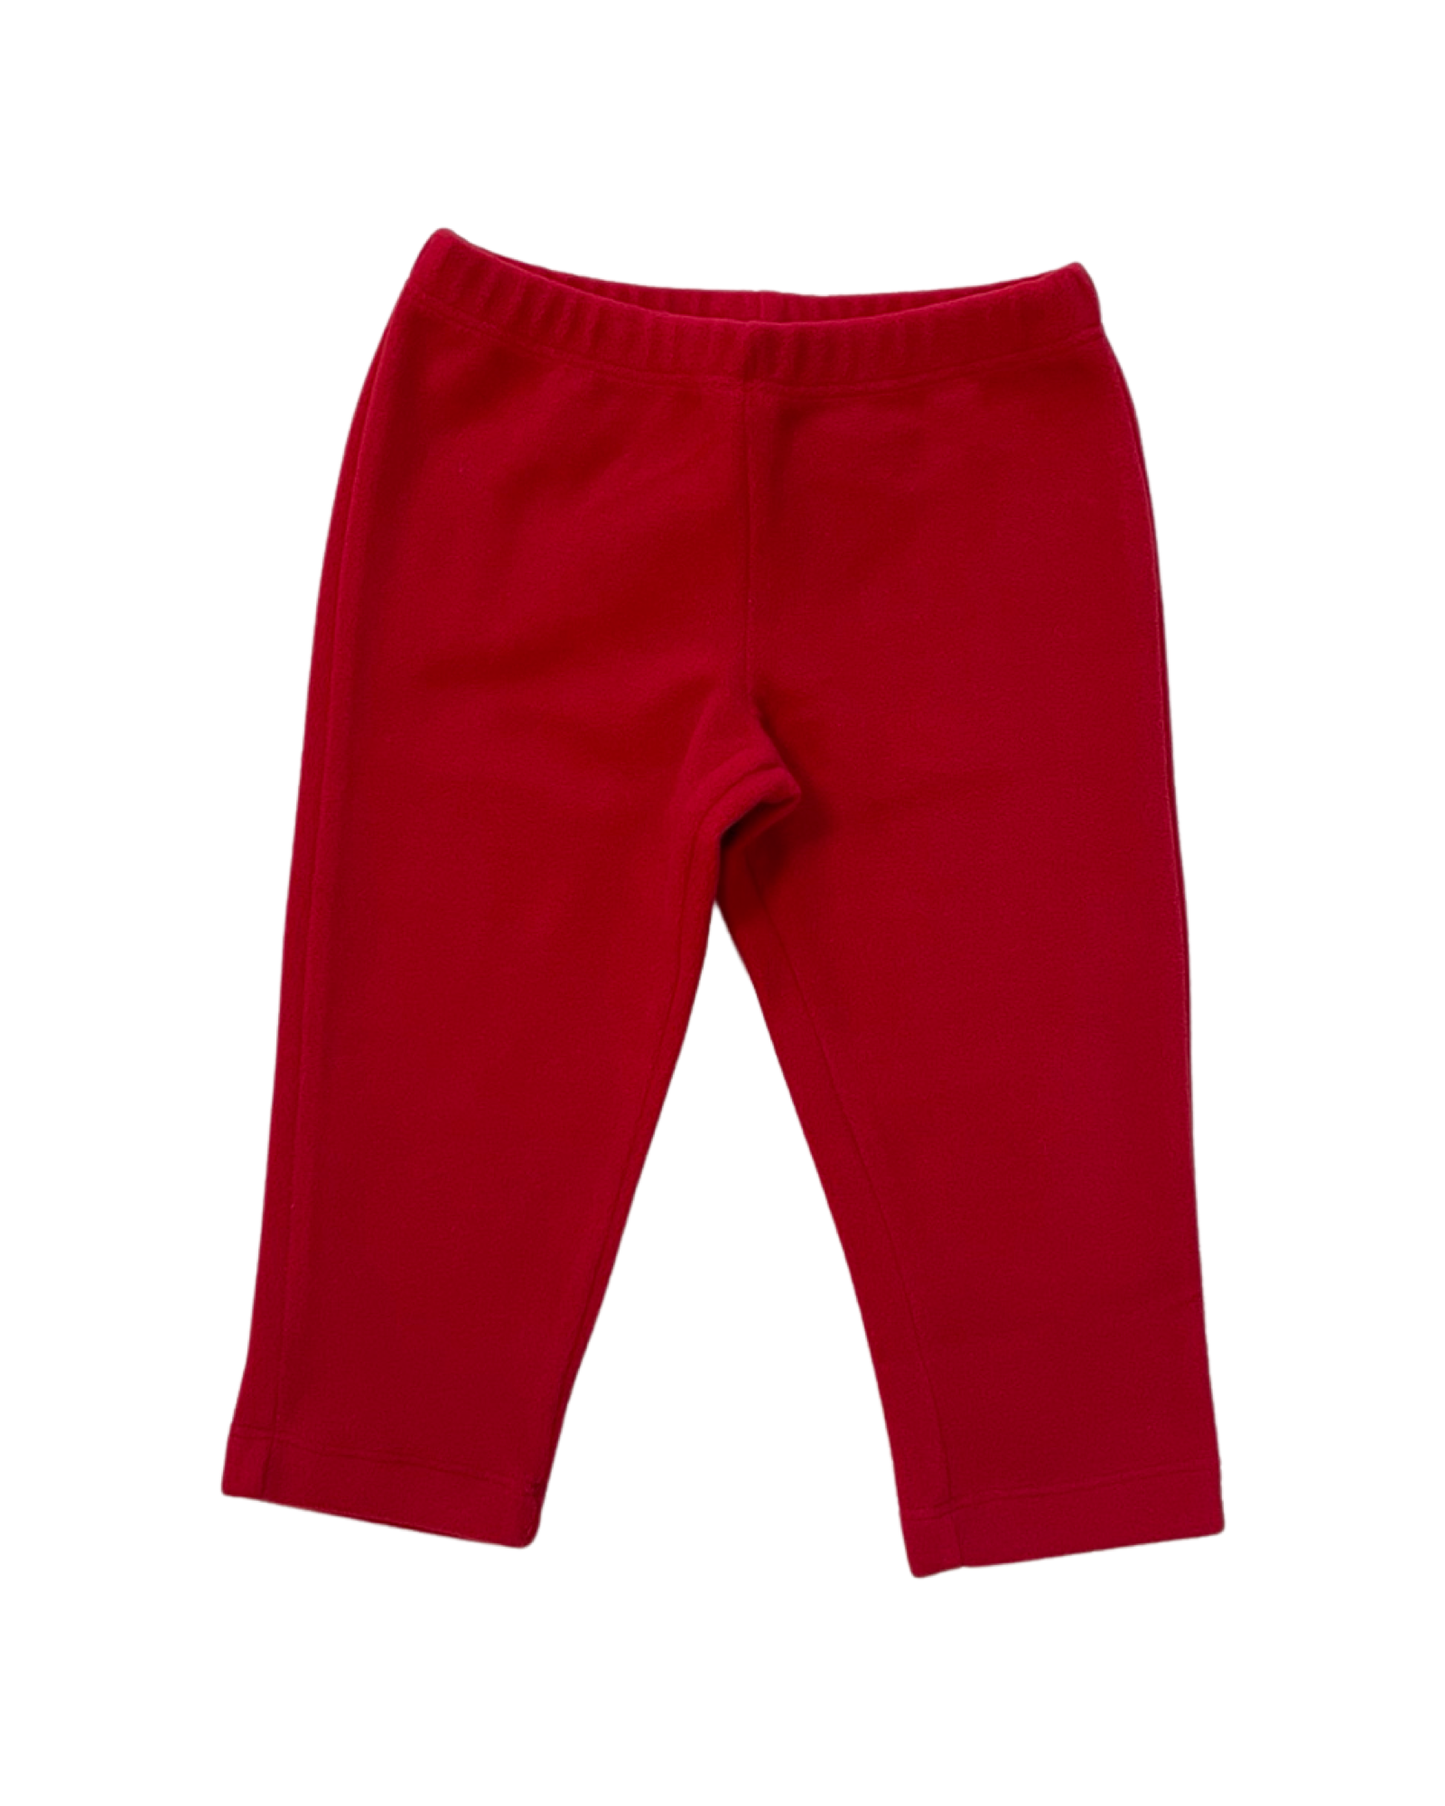 Moncler Enfant Sweat shirt and Pants Set MCL0119W0032 (E2951-8808105-80093)